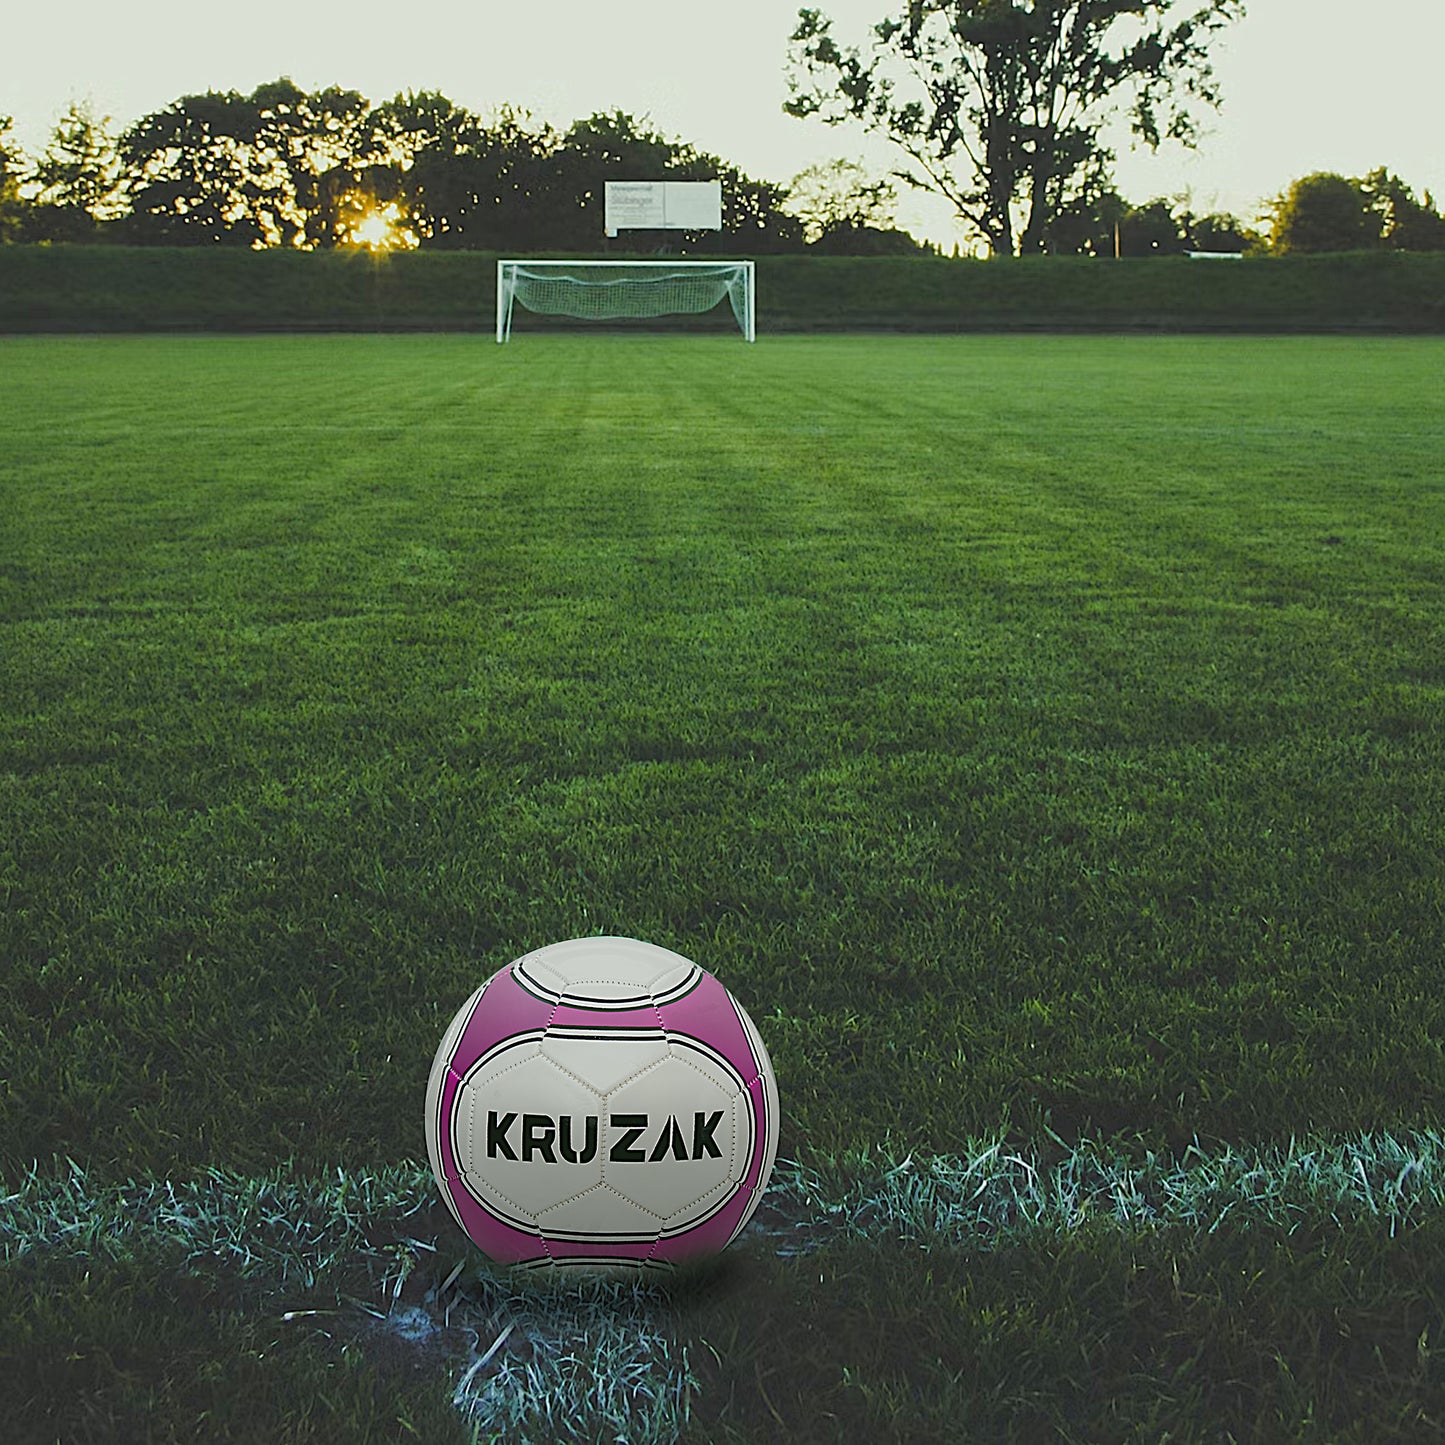 Kruzak Premier Striker Size 3 Purple Machine Stitched Soccer Balls for Training, Recreation, Practice - for Boys and Girls